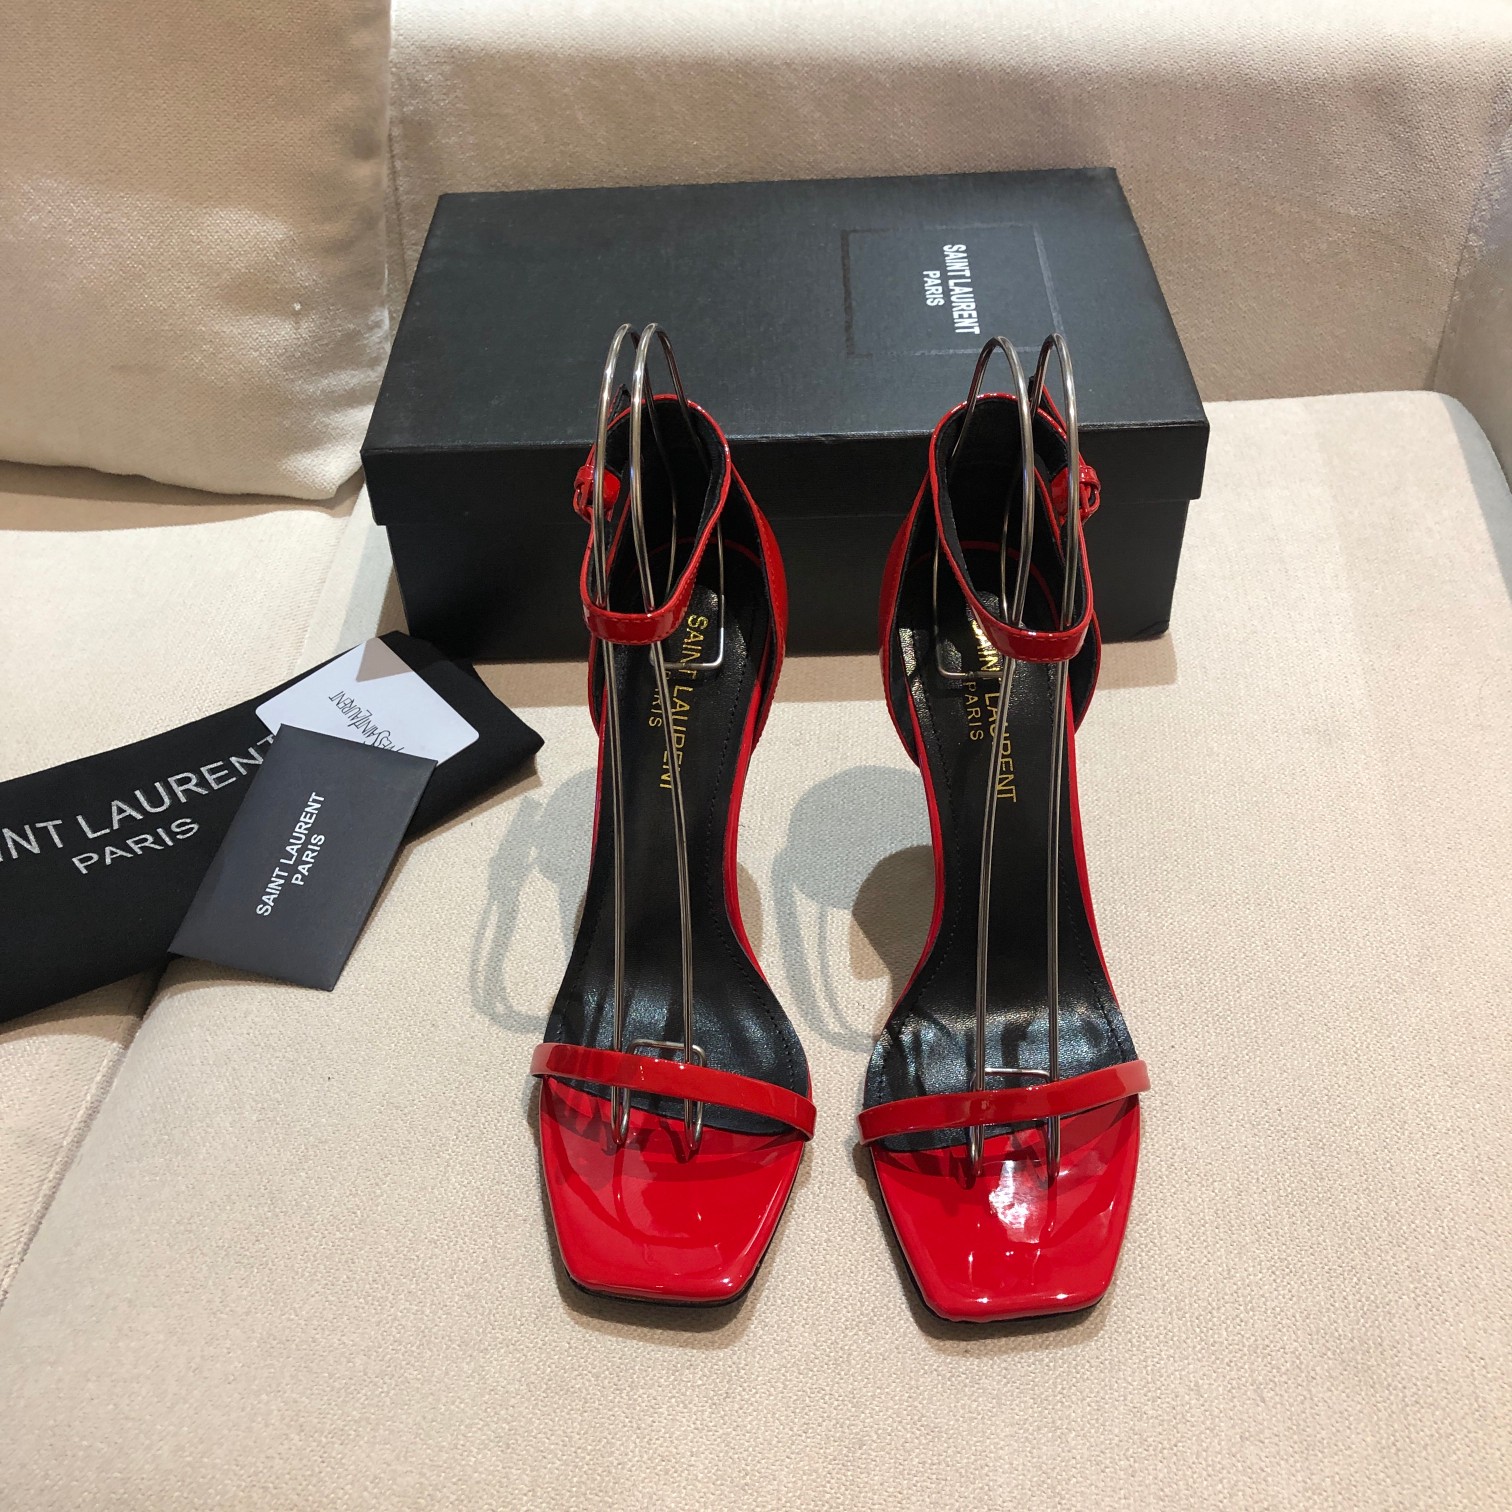 Yves Saint Laurent Shoes High Heel Pumps Sandals Apricot Color Black Pink Red Genuine Leather Patent Sheepskin